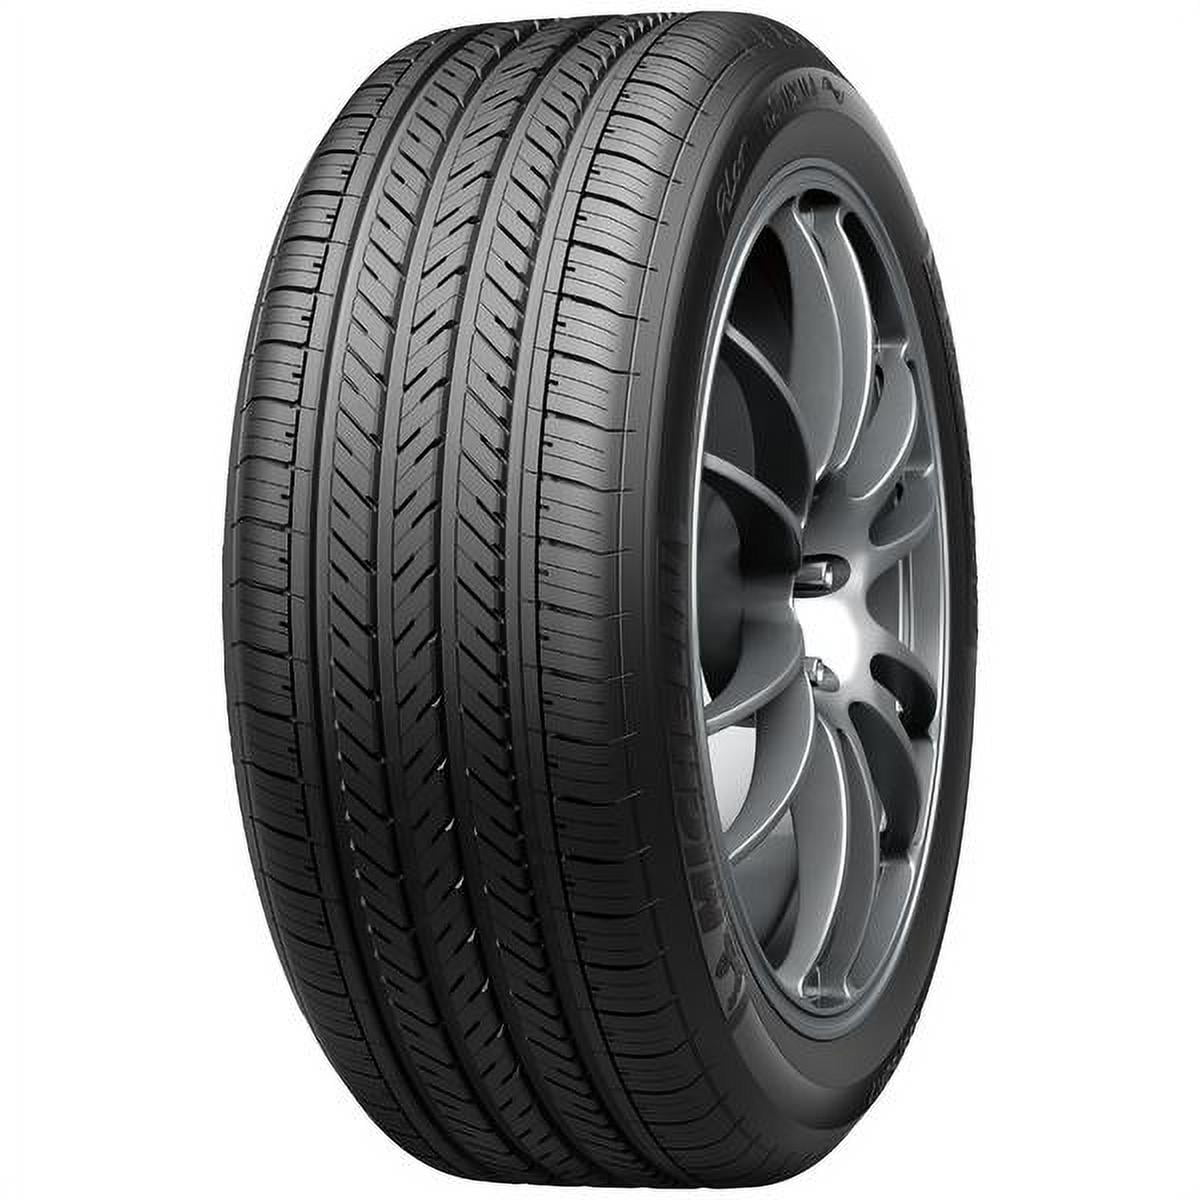 Michelin Pilot MXM4 All-Season P245/50R17 98V Tire